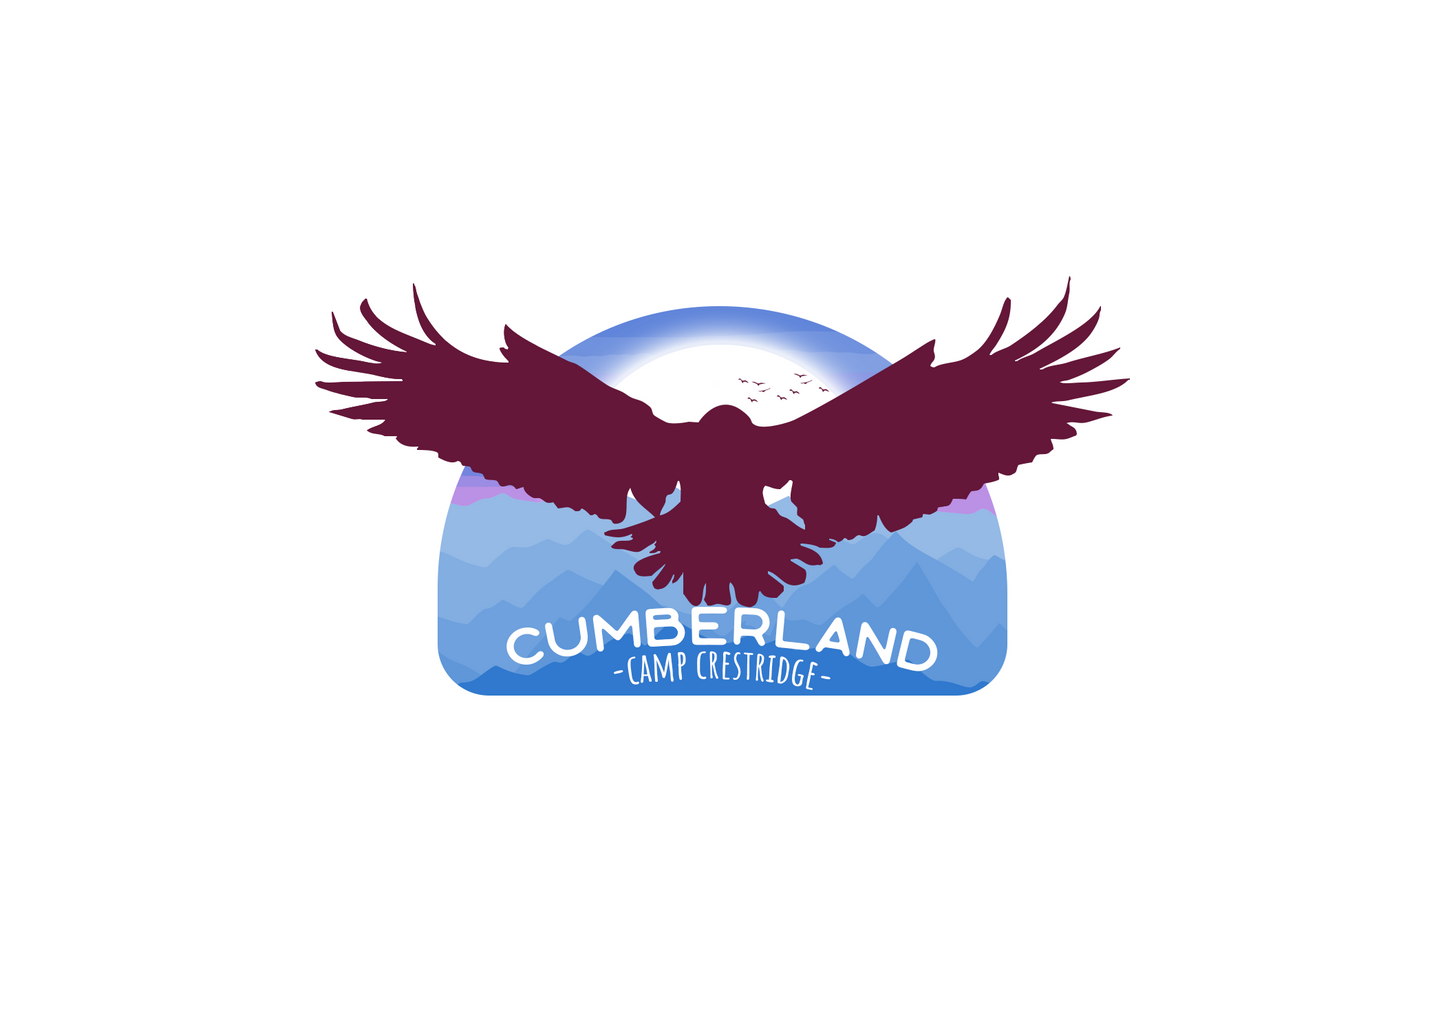 CC Cumberland Sticker